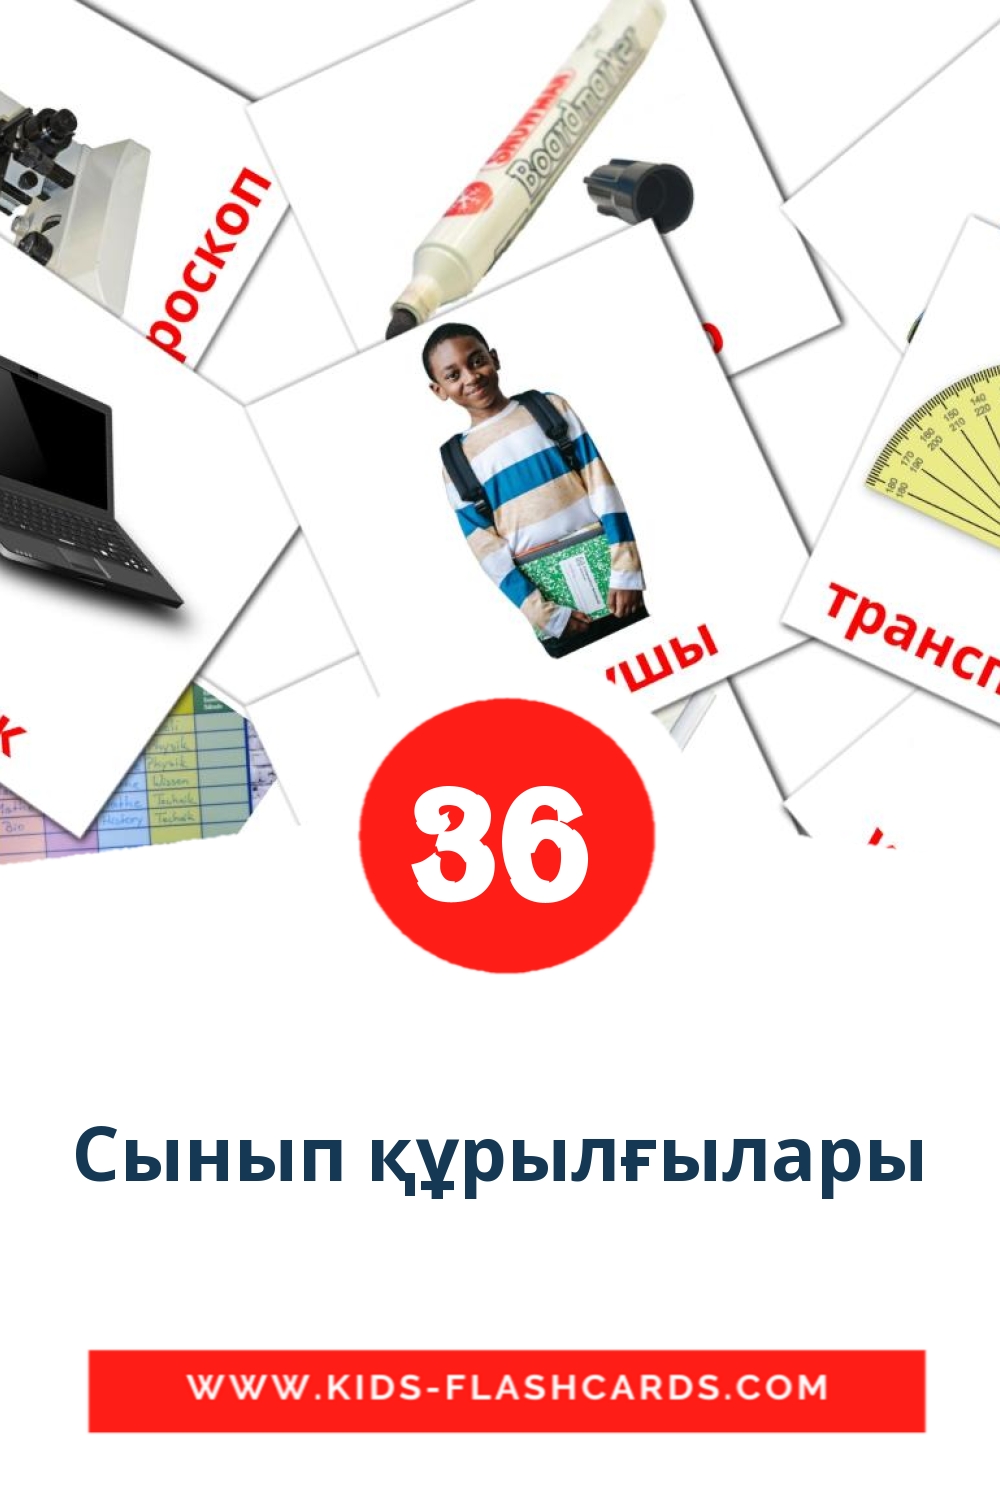 36 carte illustrate di Сынып құрылғылары per la scuola materna in kazakh